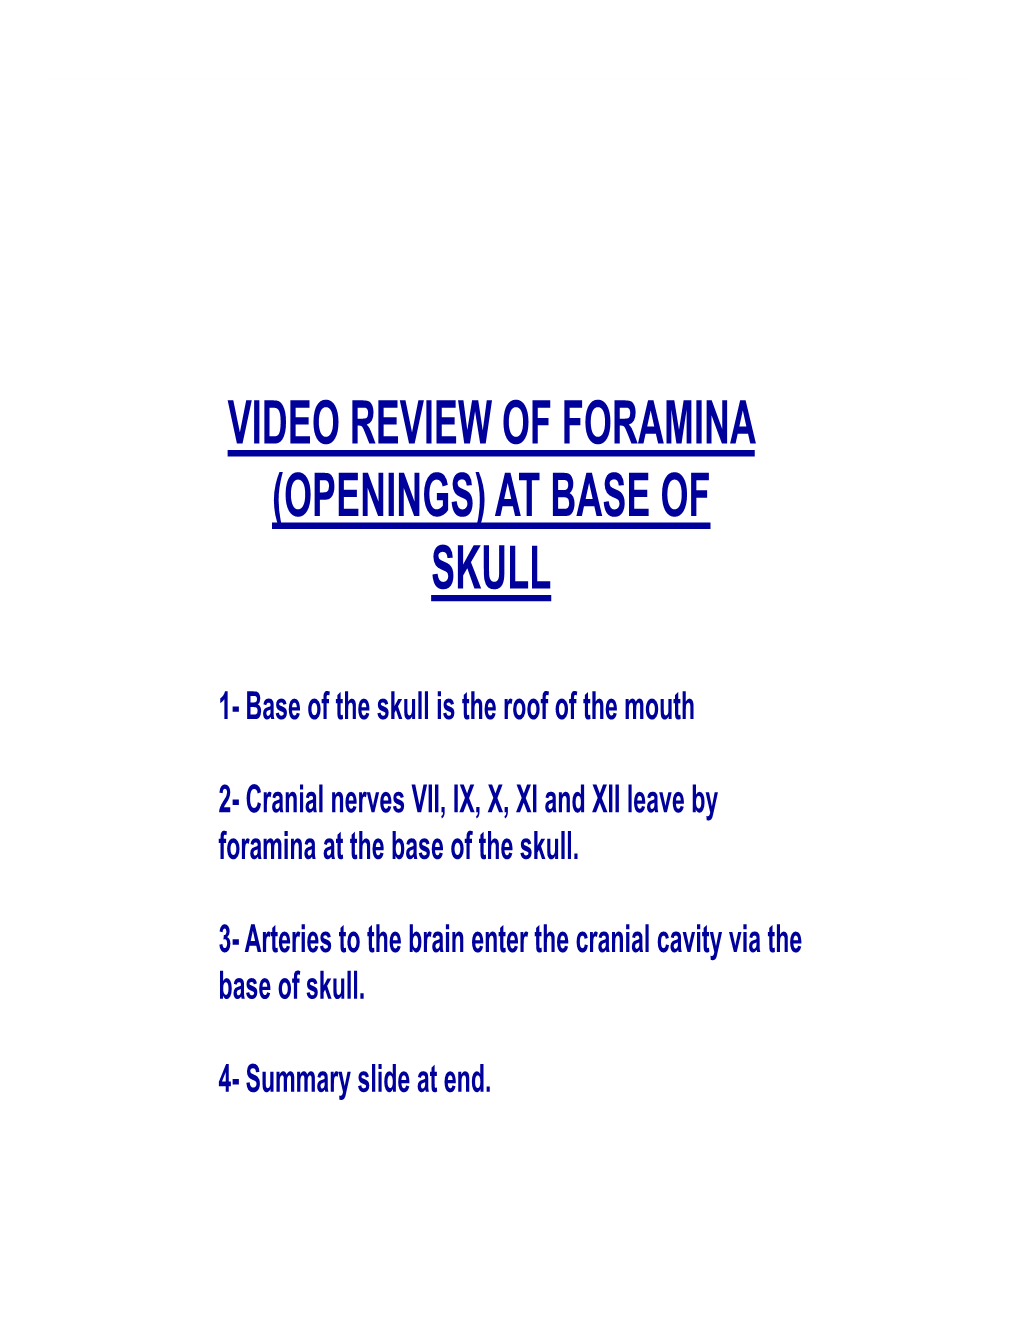 Video Review of Foramina (Openings) at Base of Skull